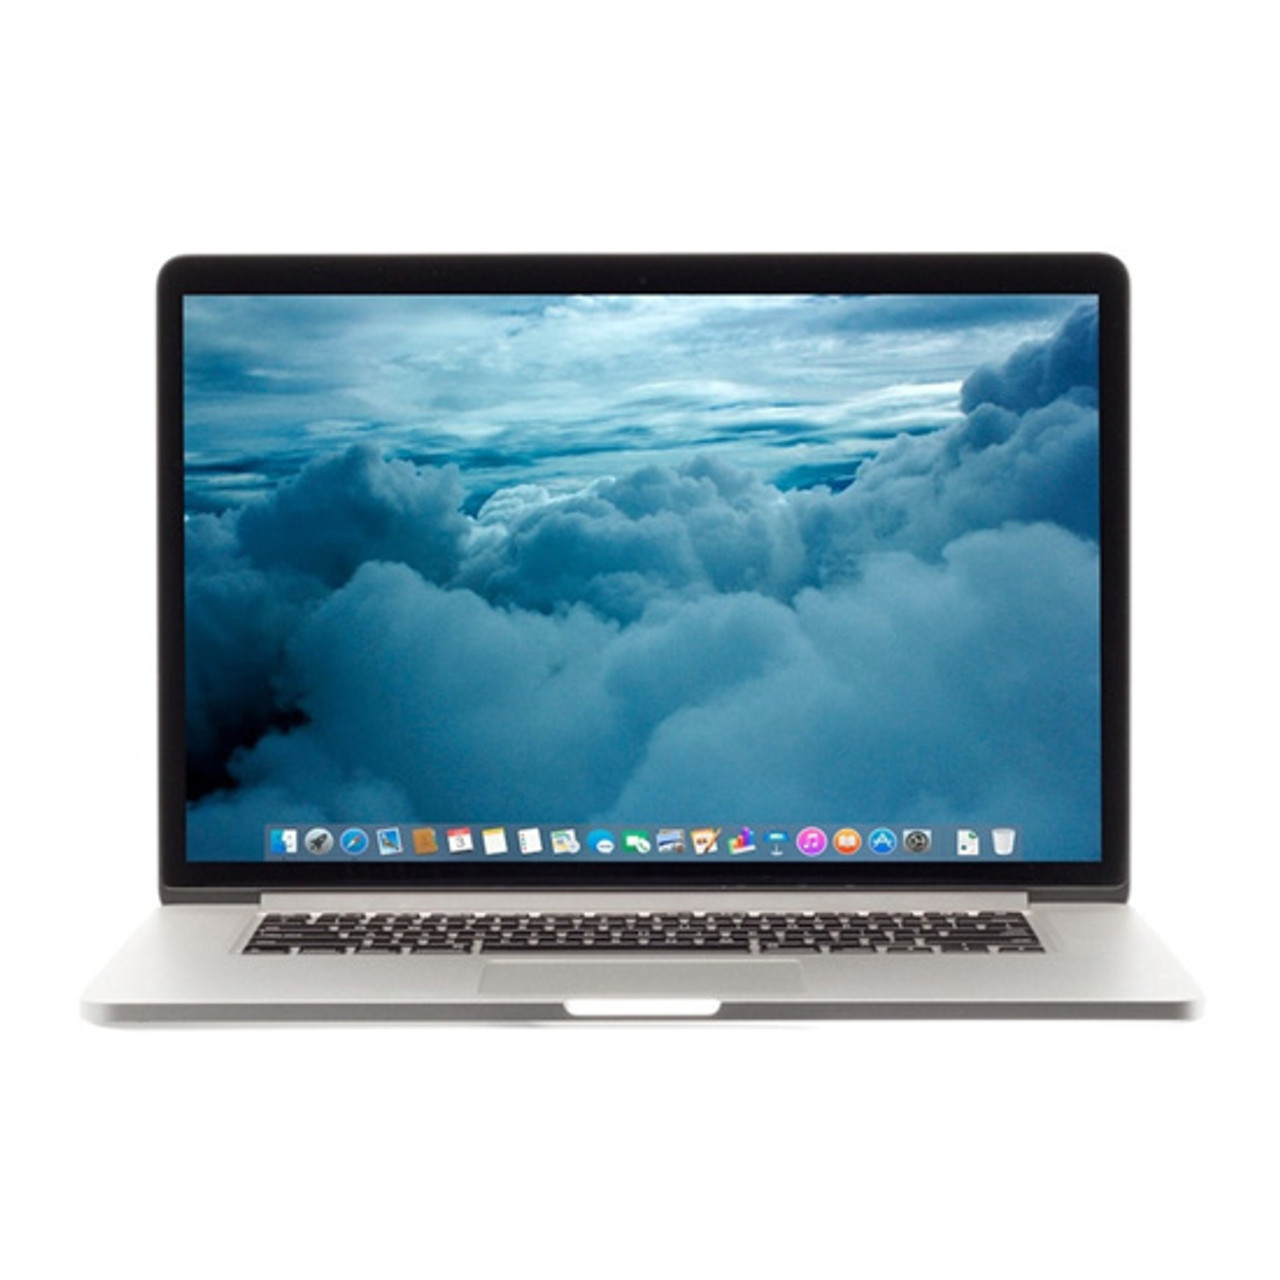 Apple MacBook Pro 15-inch 2.5GHz Quad-core i7 (Retina